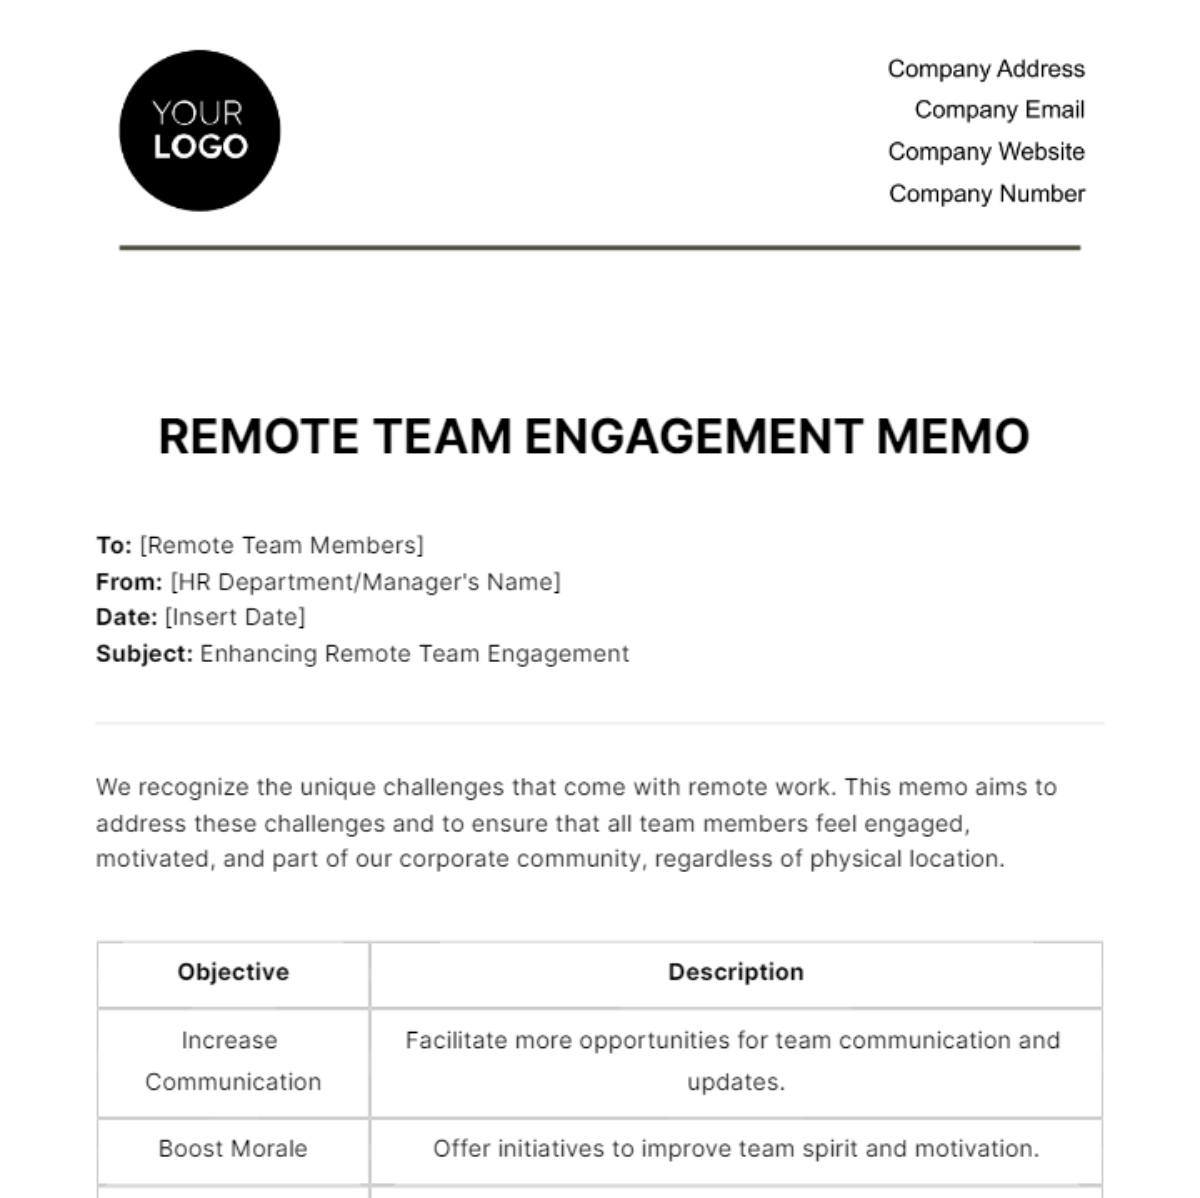 Remote Team Engagement Memo HR Template